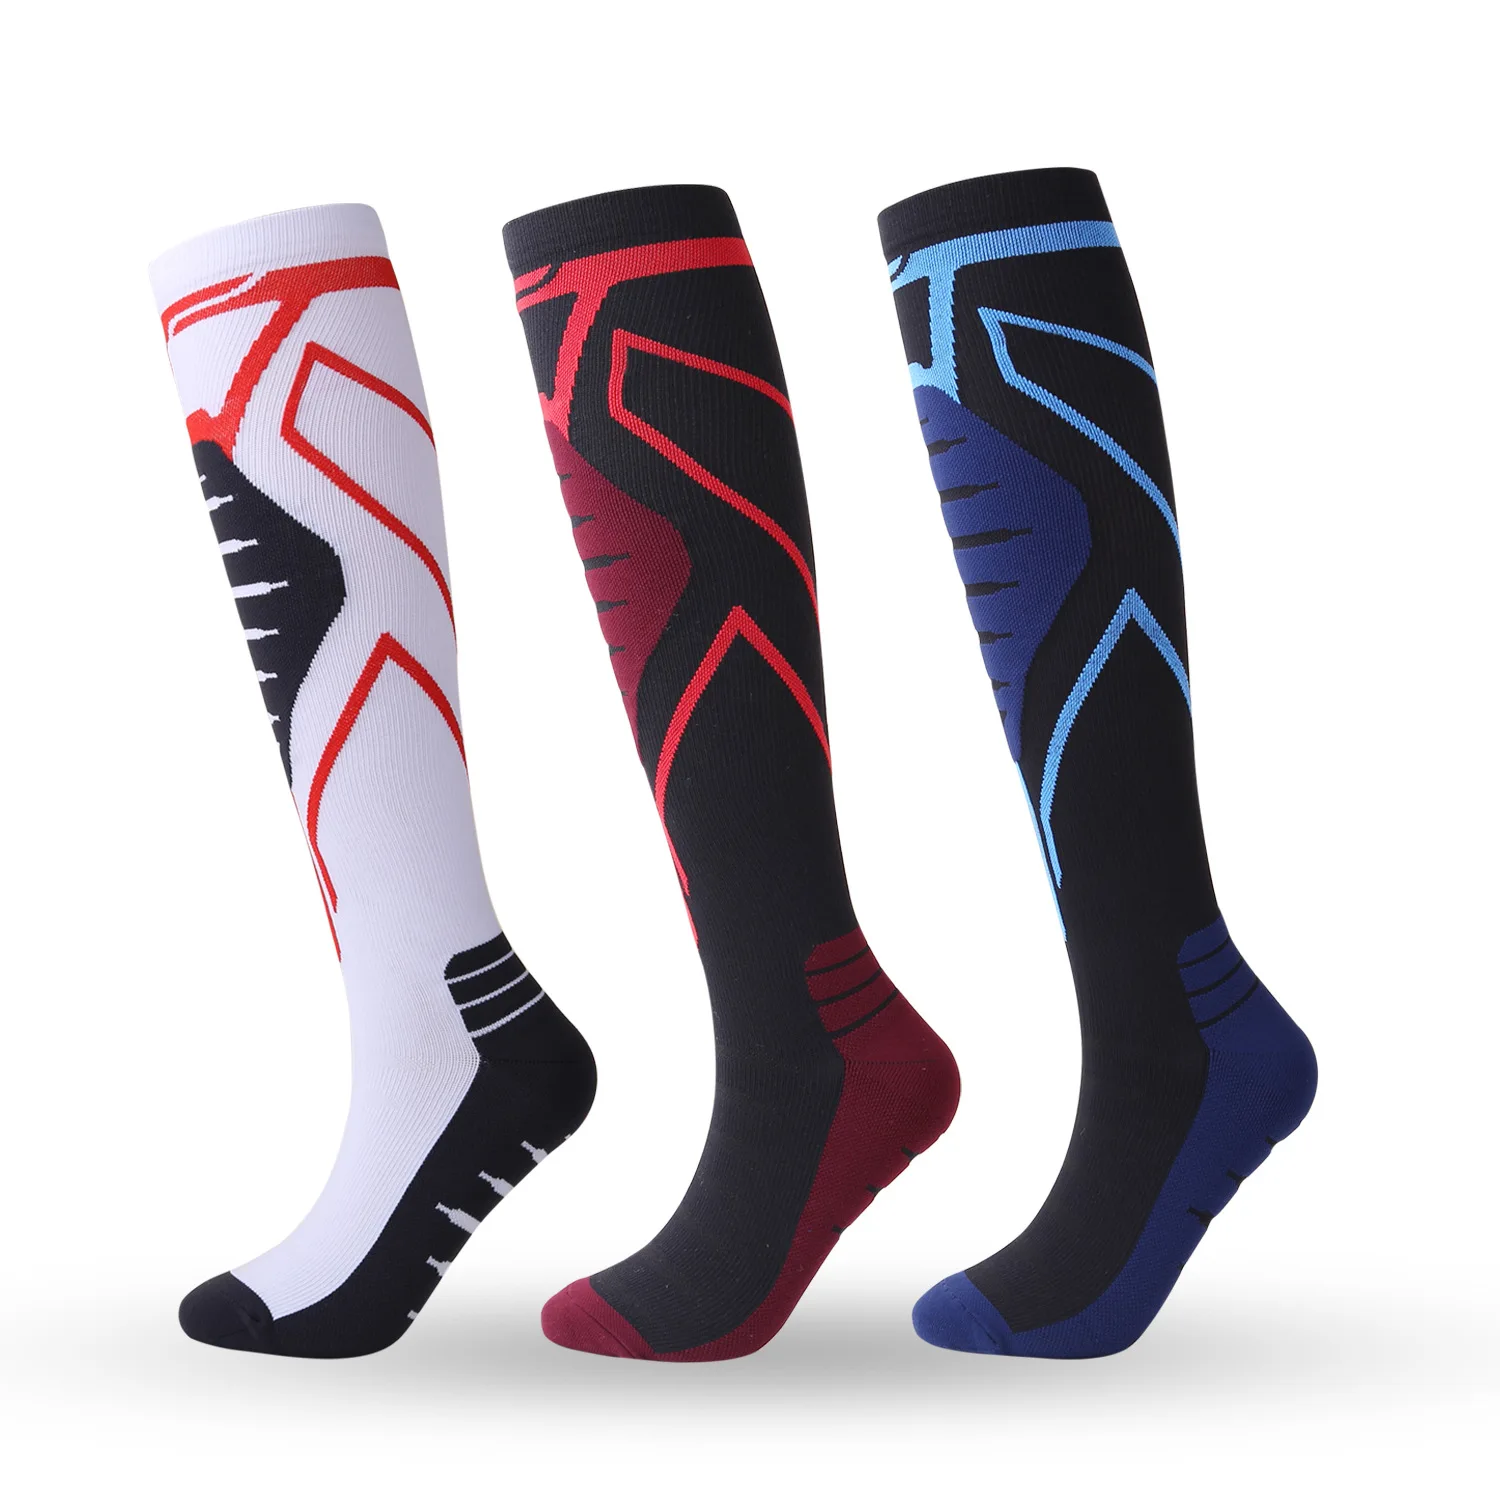 

CMX850 New fashion sports Basketball socks men anti-fatigue compression socks outdoor cycling socks